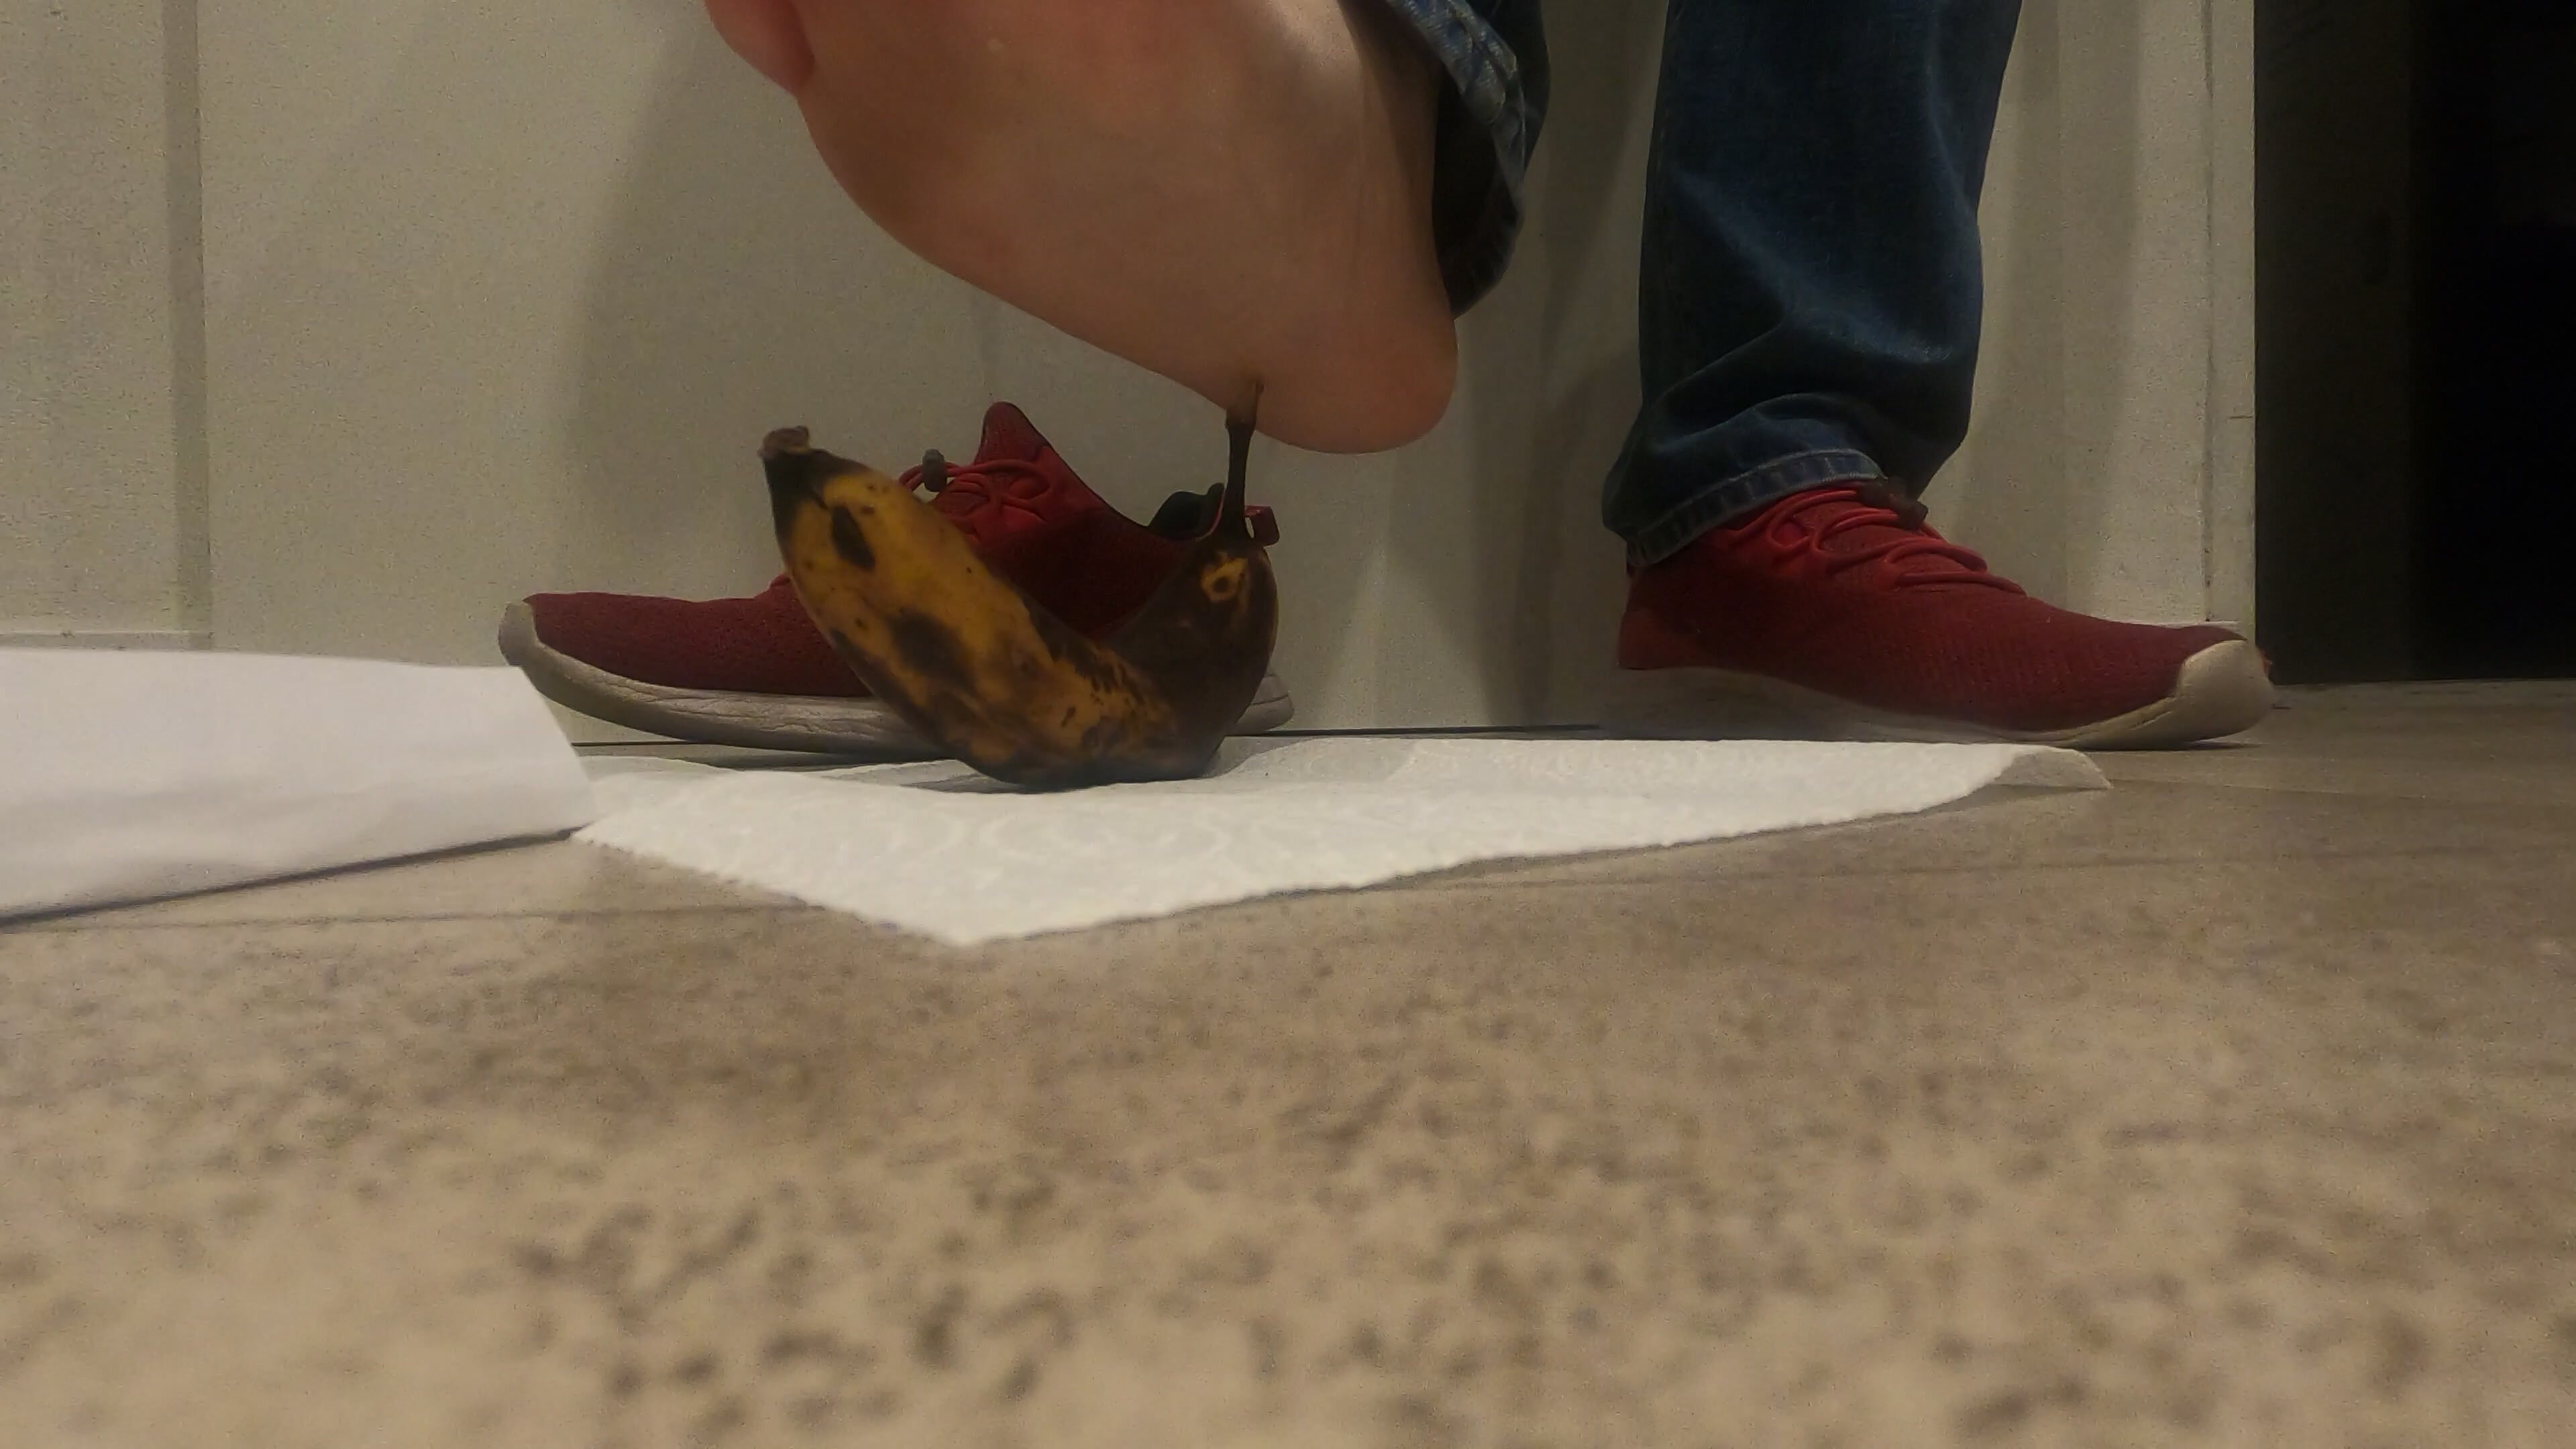 Shoe remove and banana squash